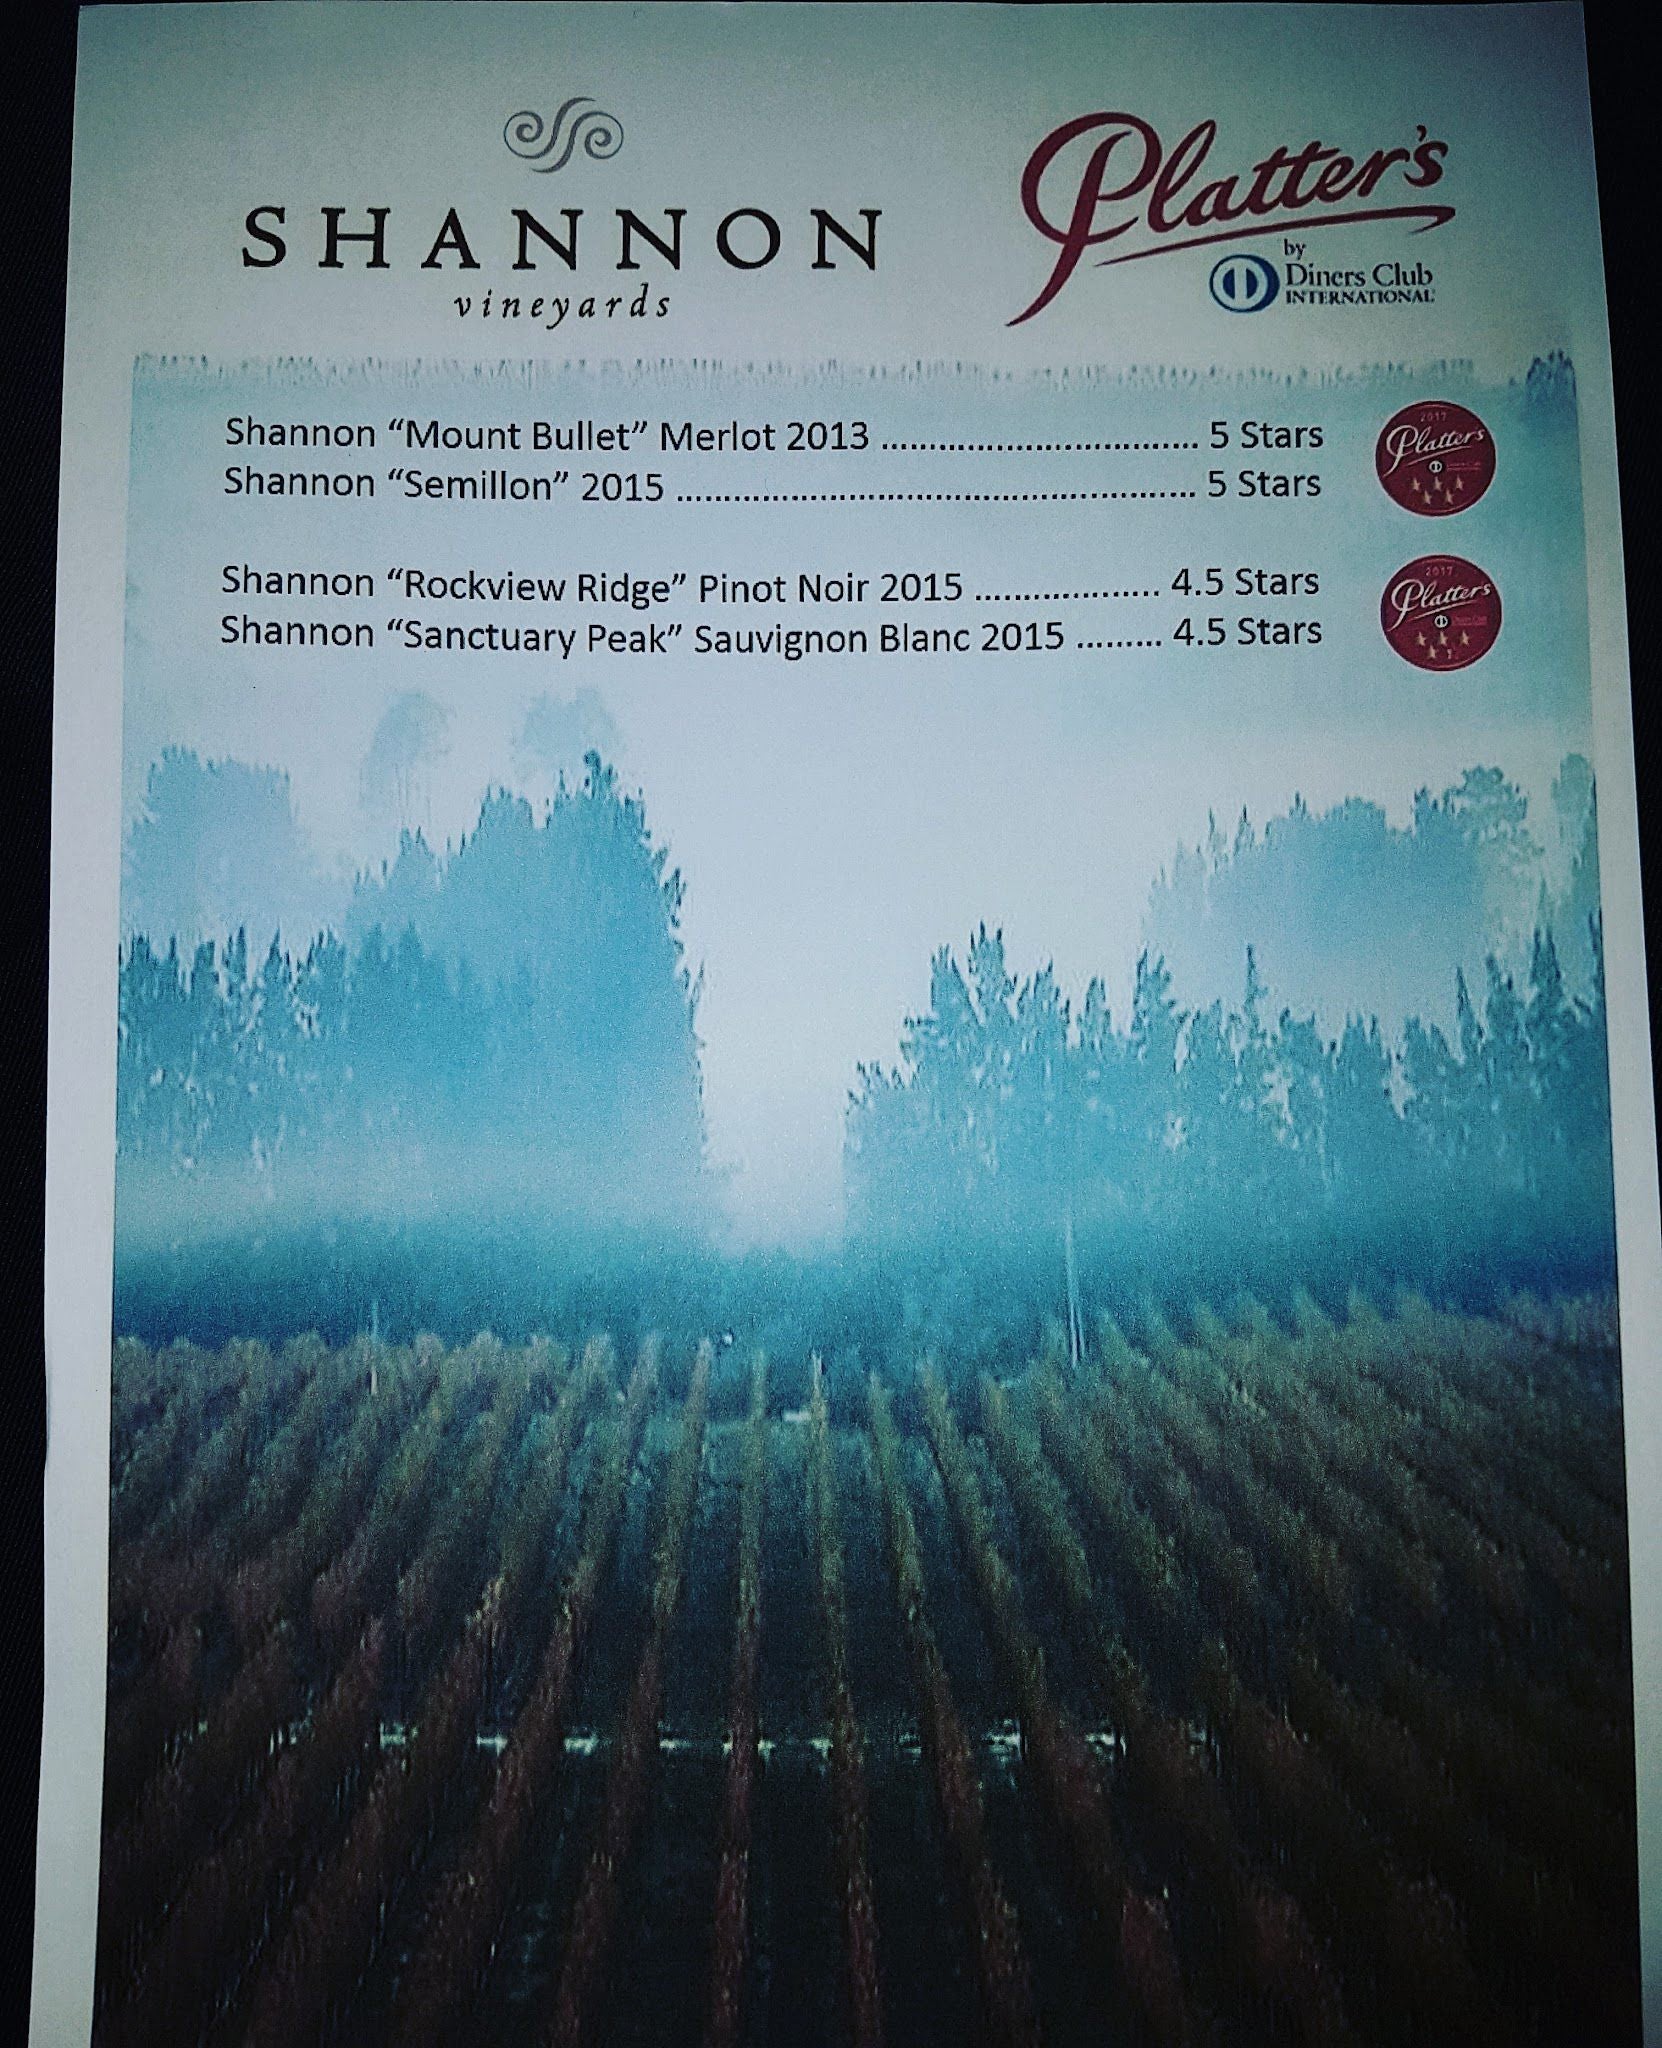  Shannon Vineyards & Wines